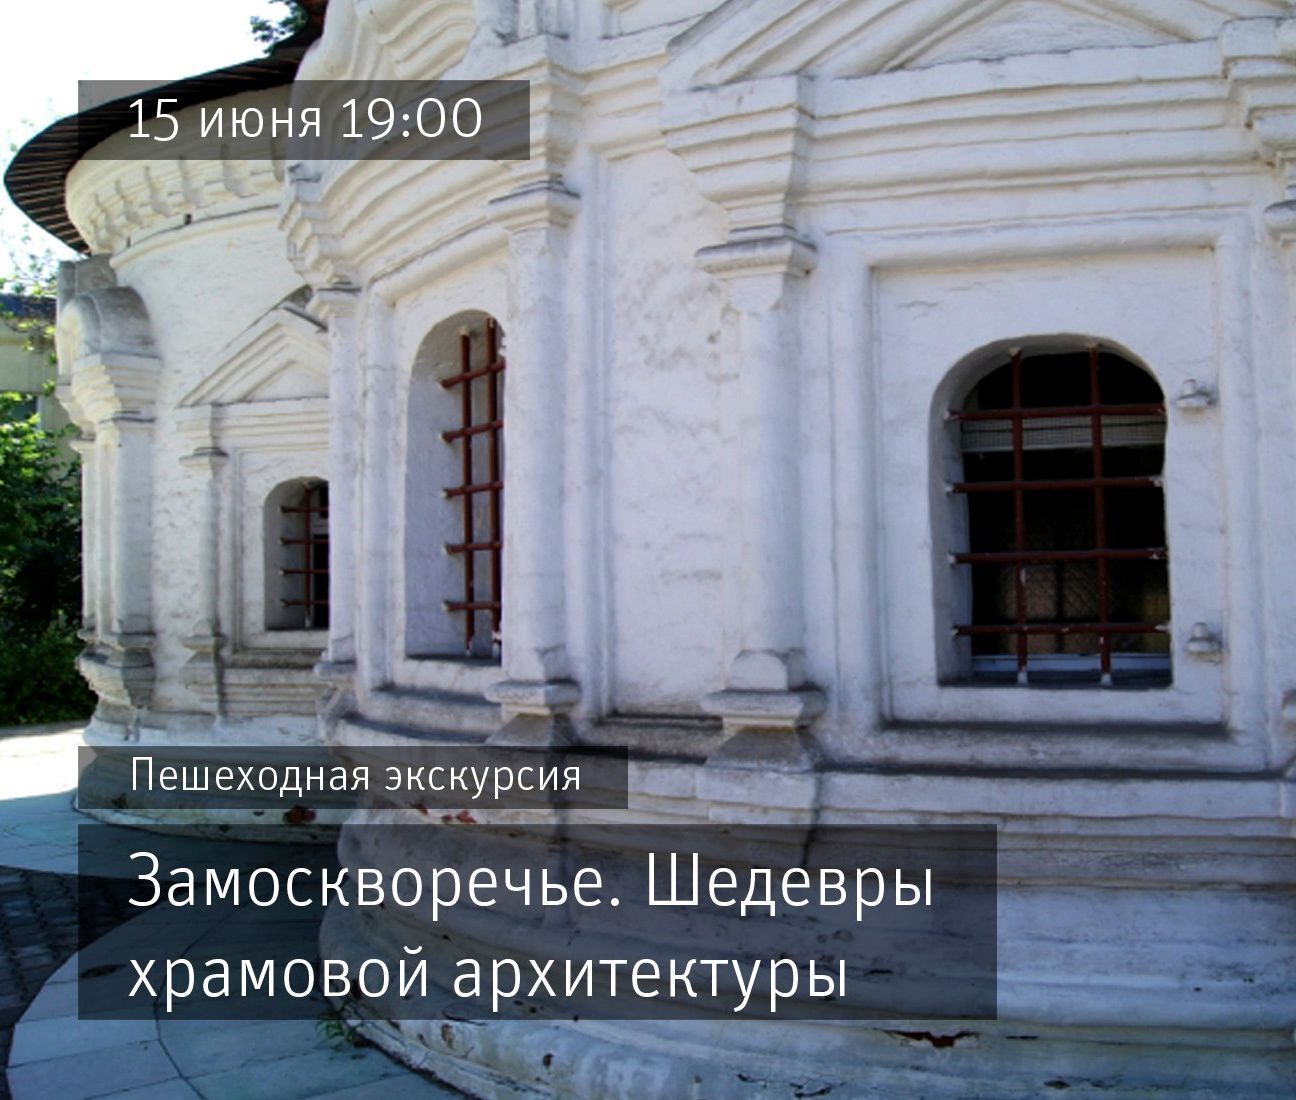 Walking tour «Zamoskvorechye. Masterpieces of Temple Architecture»